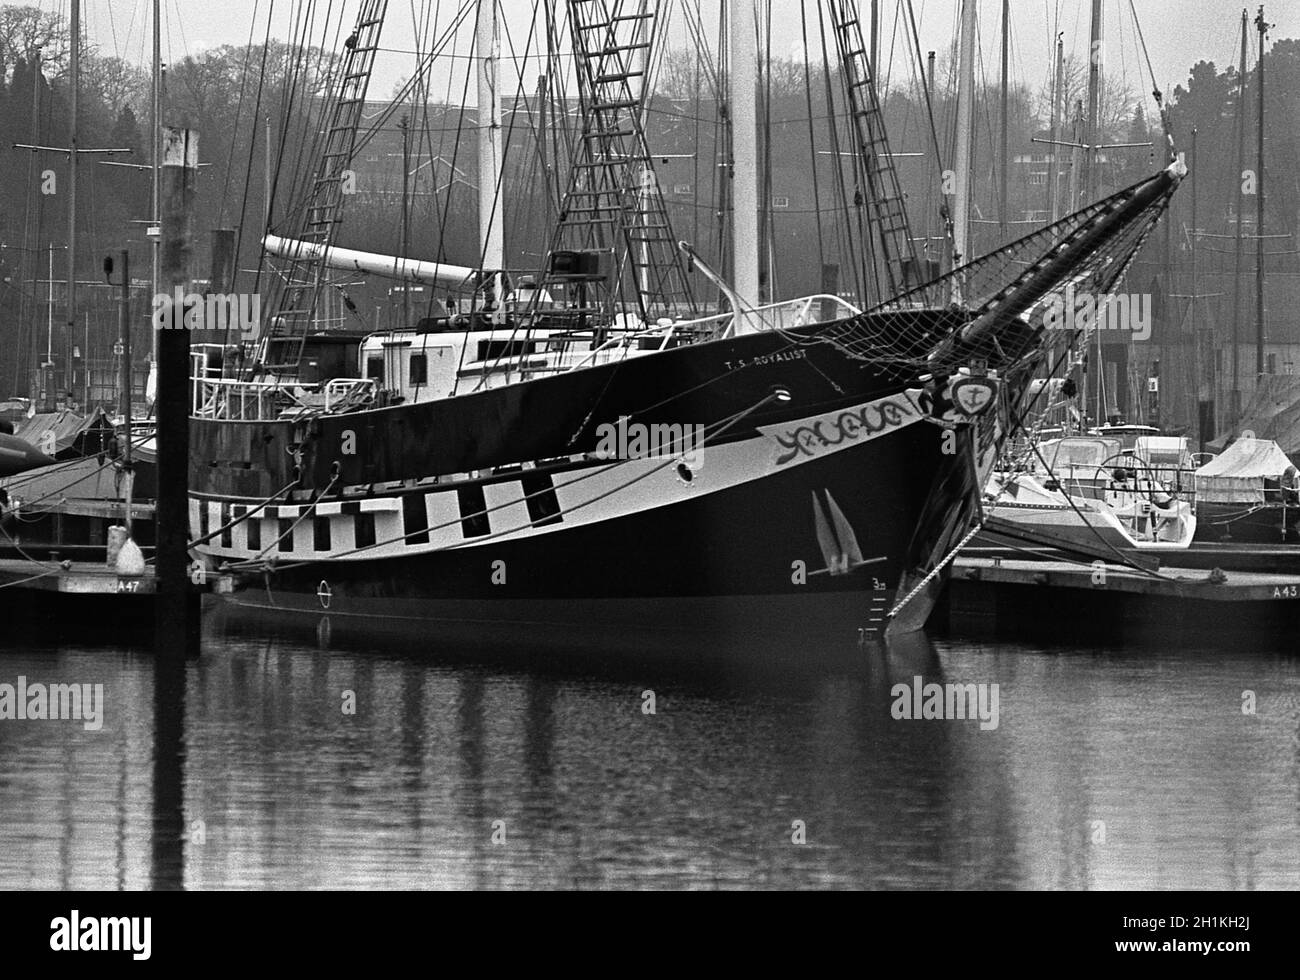 AJAXNETPHOTO. 1976. SWANWICK MARINA, SOUTHAMPTON, ENGLAND. - TRAINING SHIP - THE SEA CADET TRAINING SHIP T.S. ROYALIST MOORED AT A.H. MOODY'S MARINA ON THE HAMBLE RIVER.PHOTO:JONATHAN EASTLAND/AJAX REF:2760301 5 Stock Photo